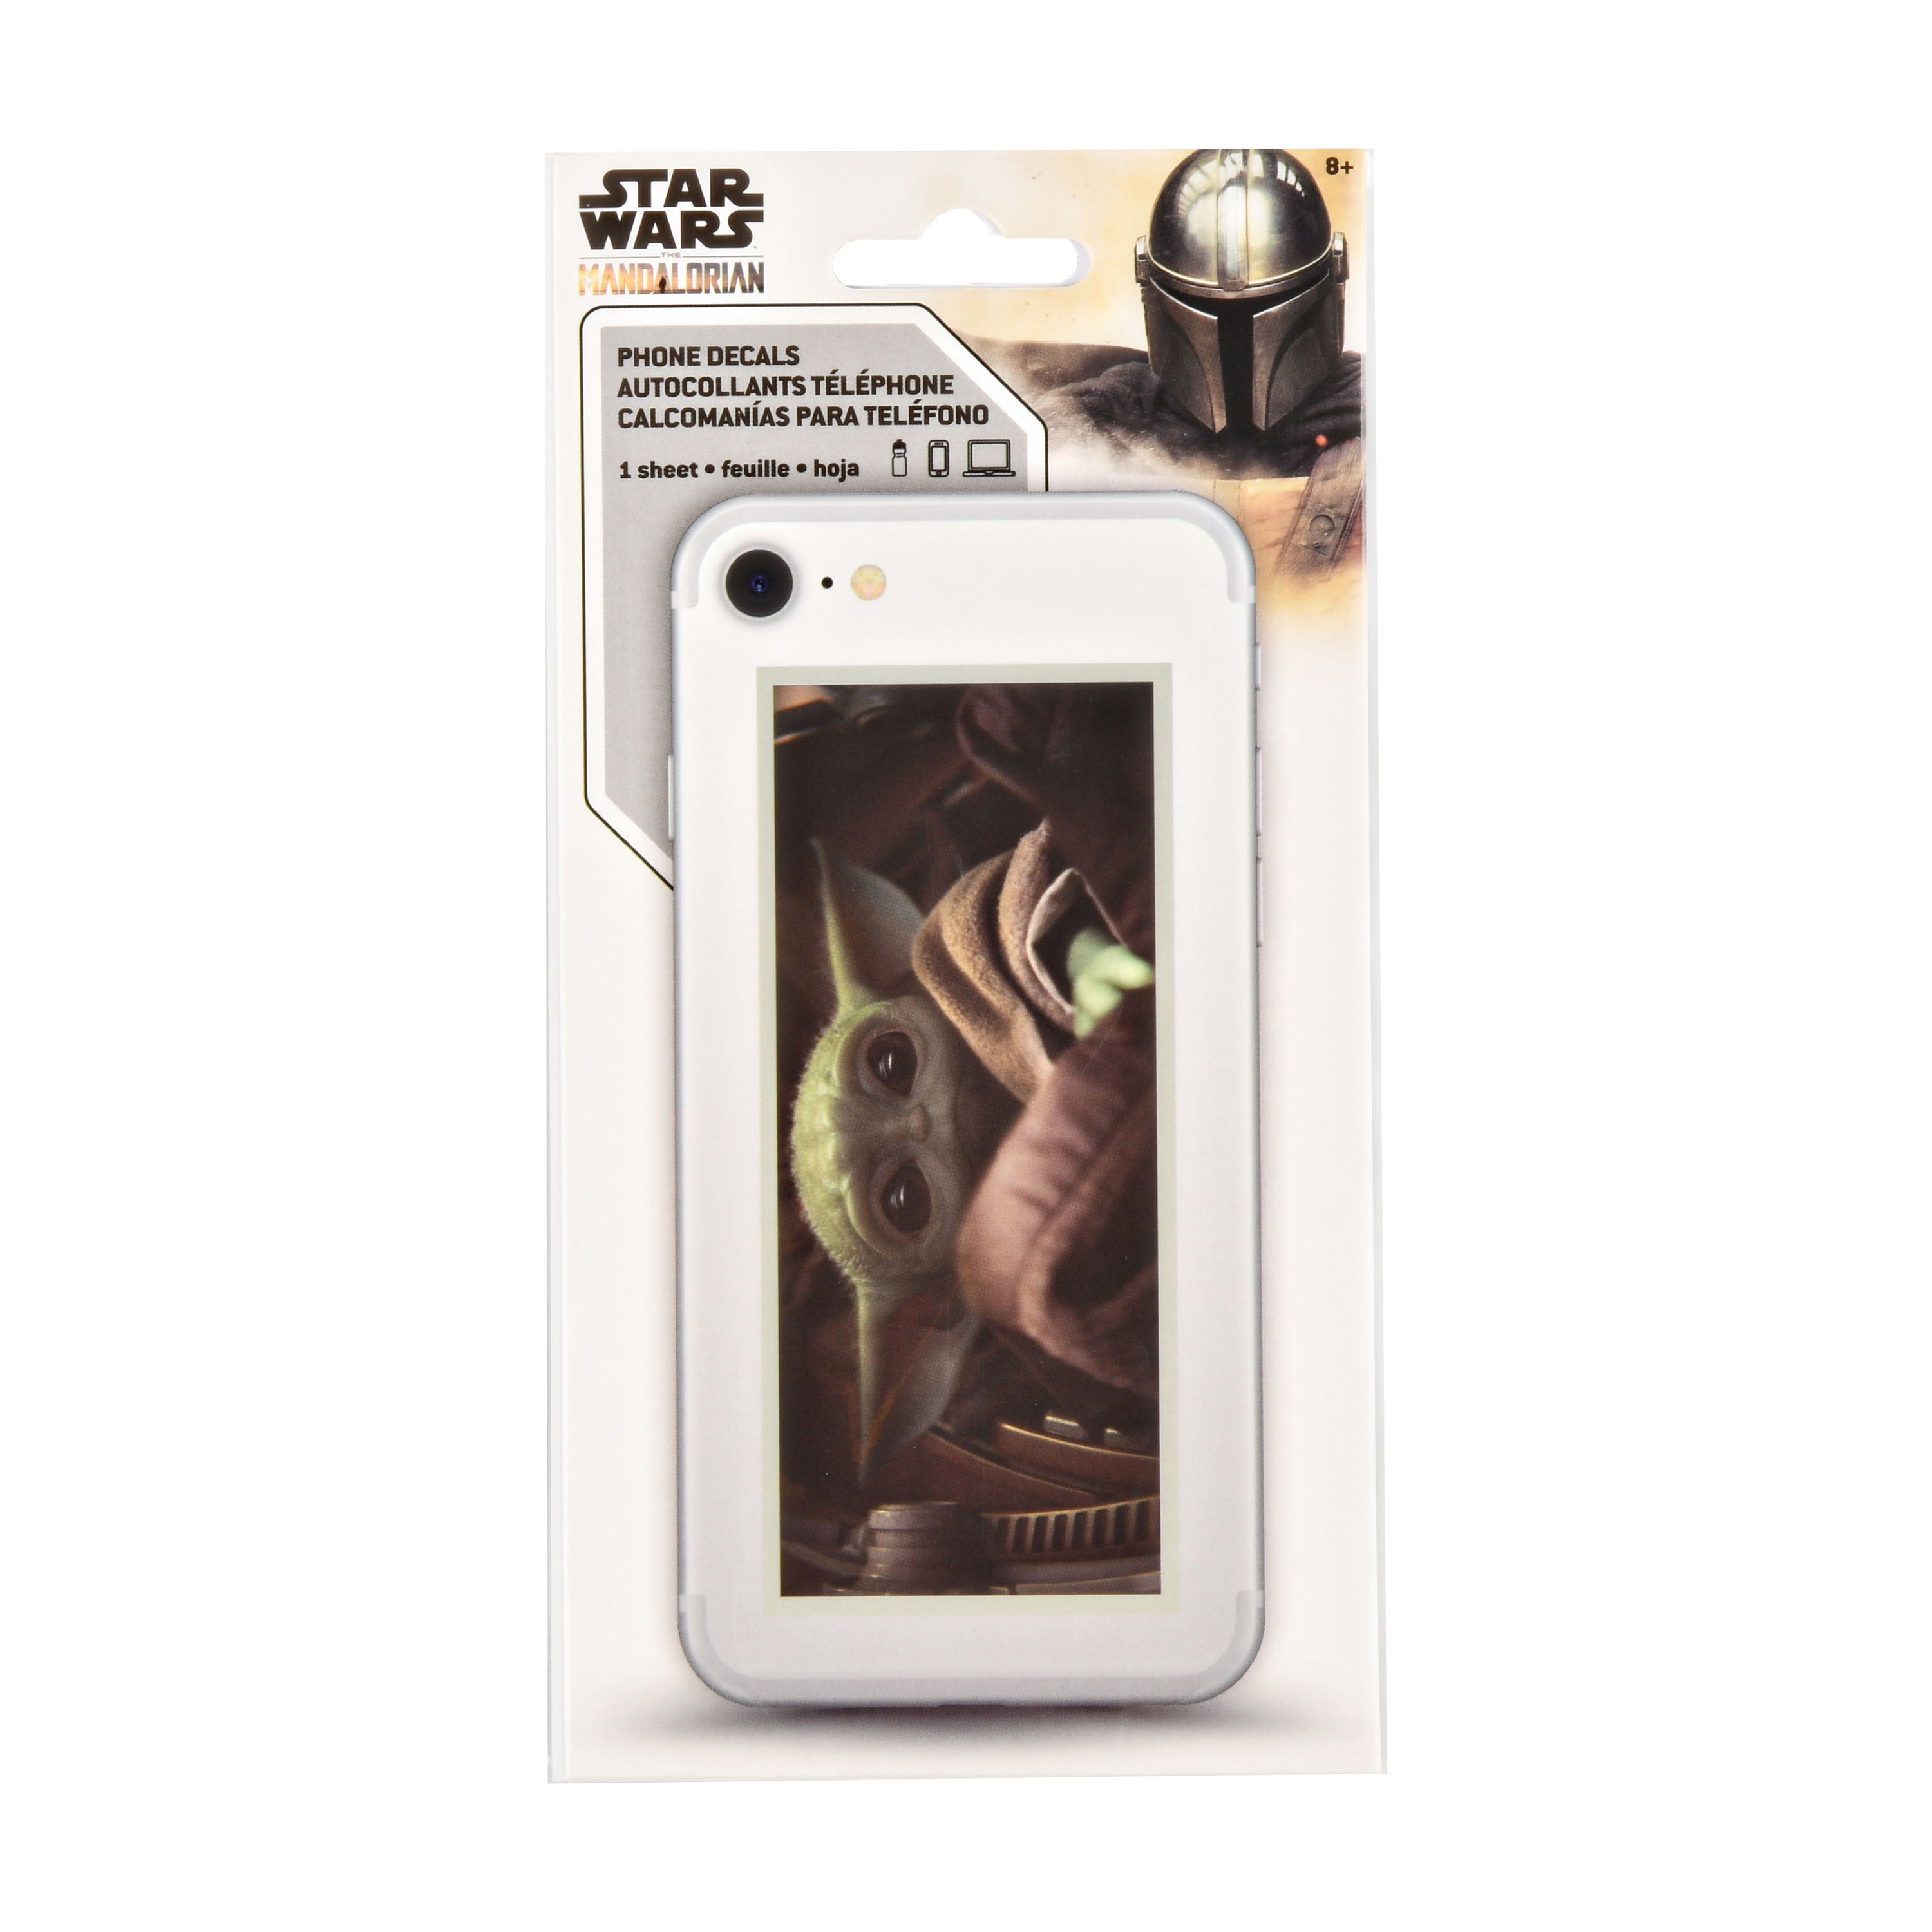 100PCS Star Wars Stickers Pack Baby Yoda Mandalorian Laptop Phone Toy Decal 2.5" 